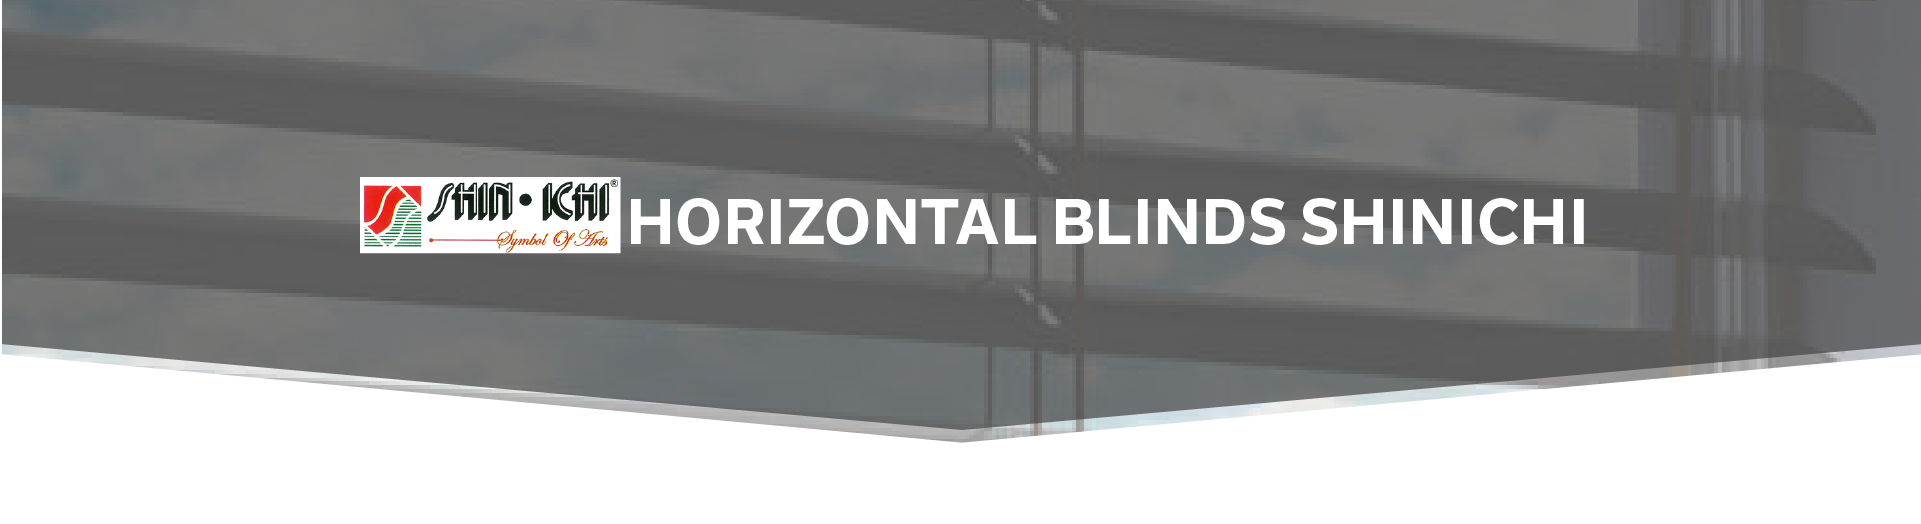 horizontal blinds shinichi cover by halcyon